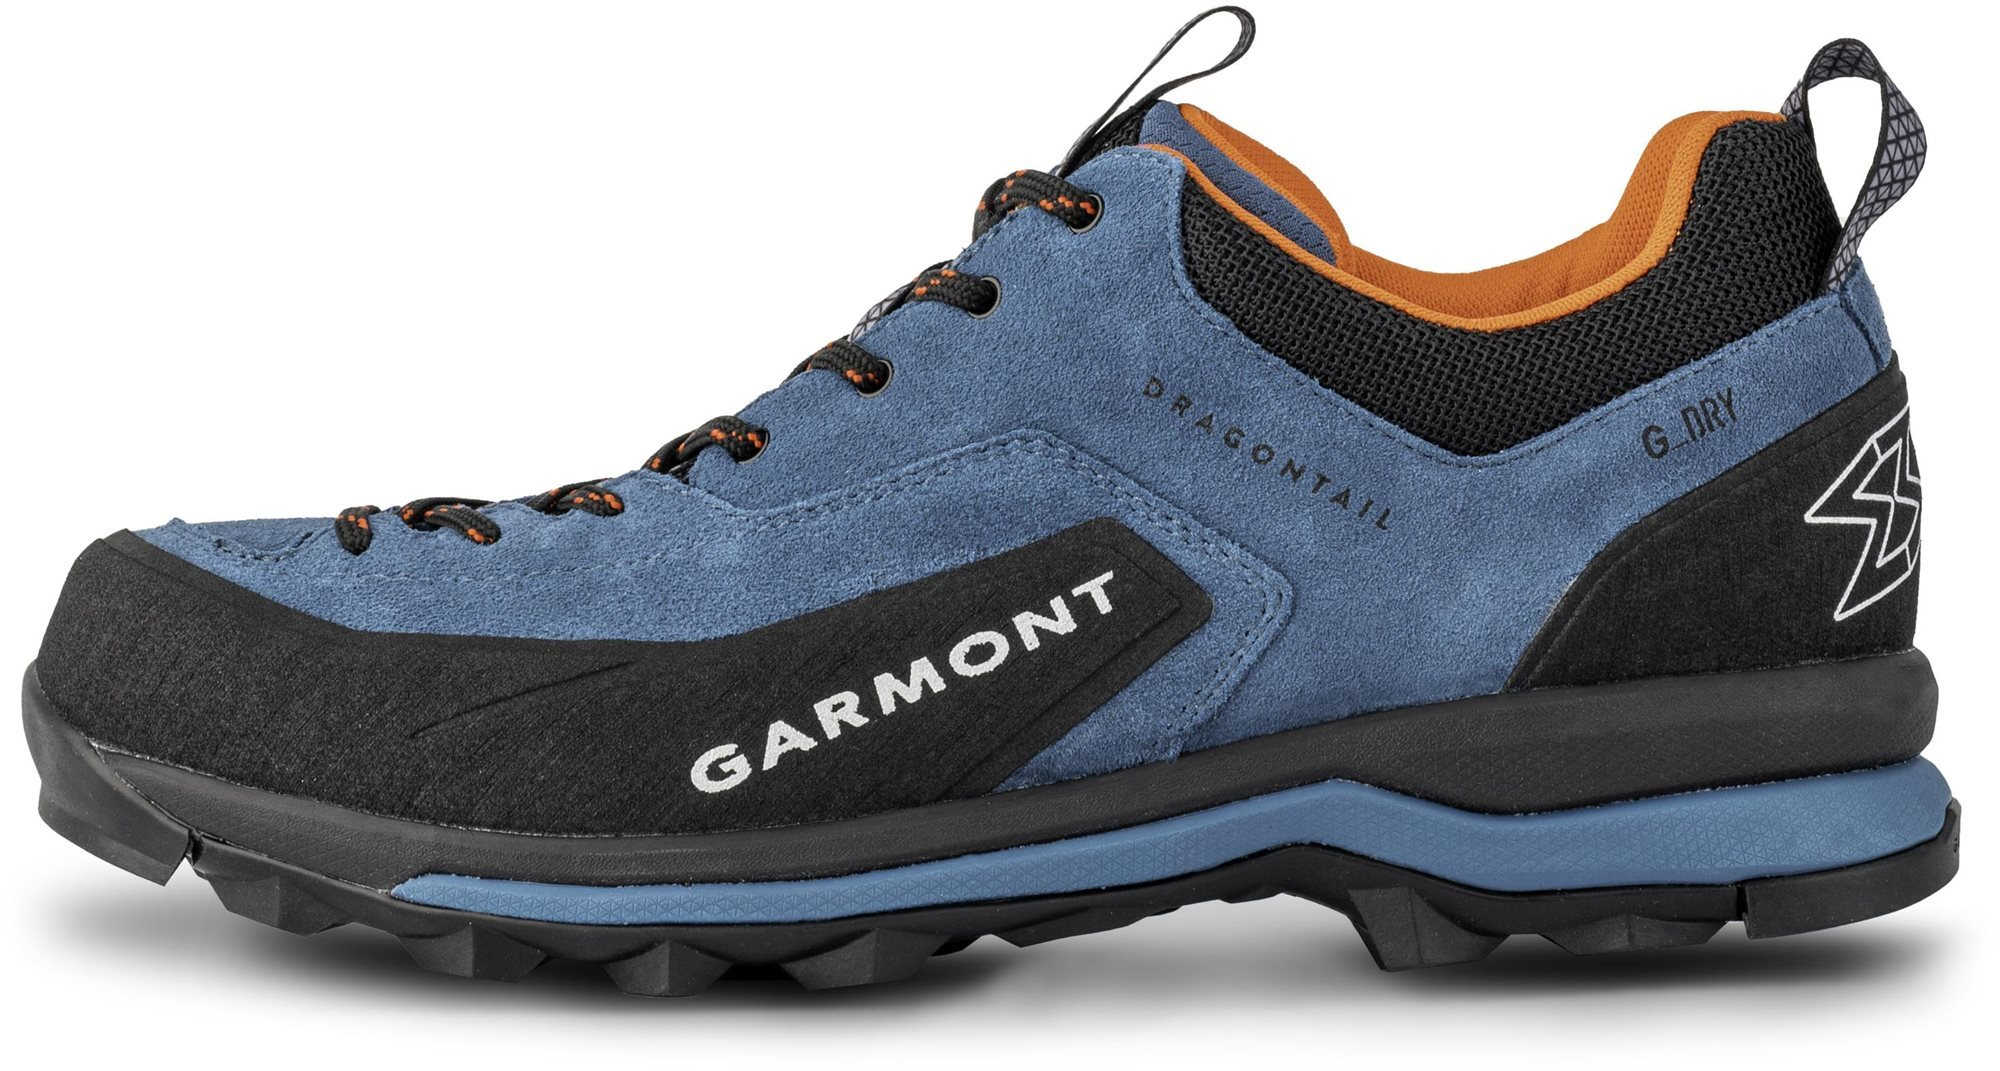 Trekking cipő Garmont Dragontail G-Dry kék-piros